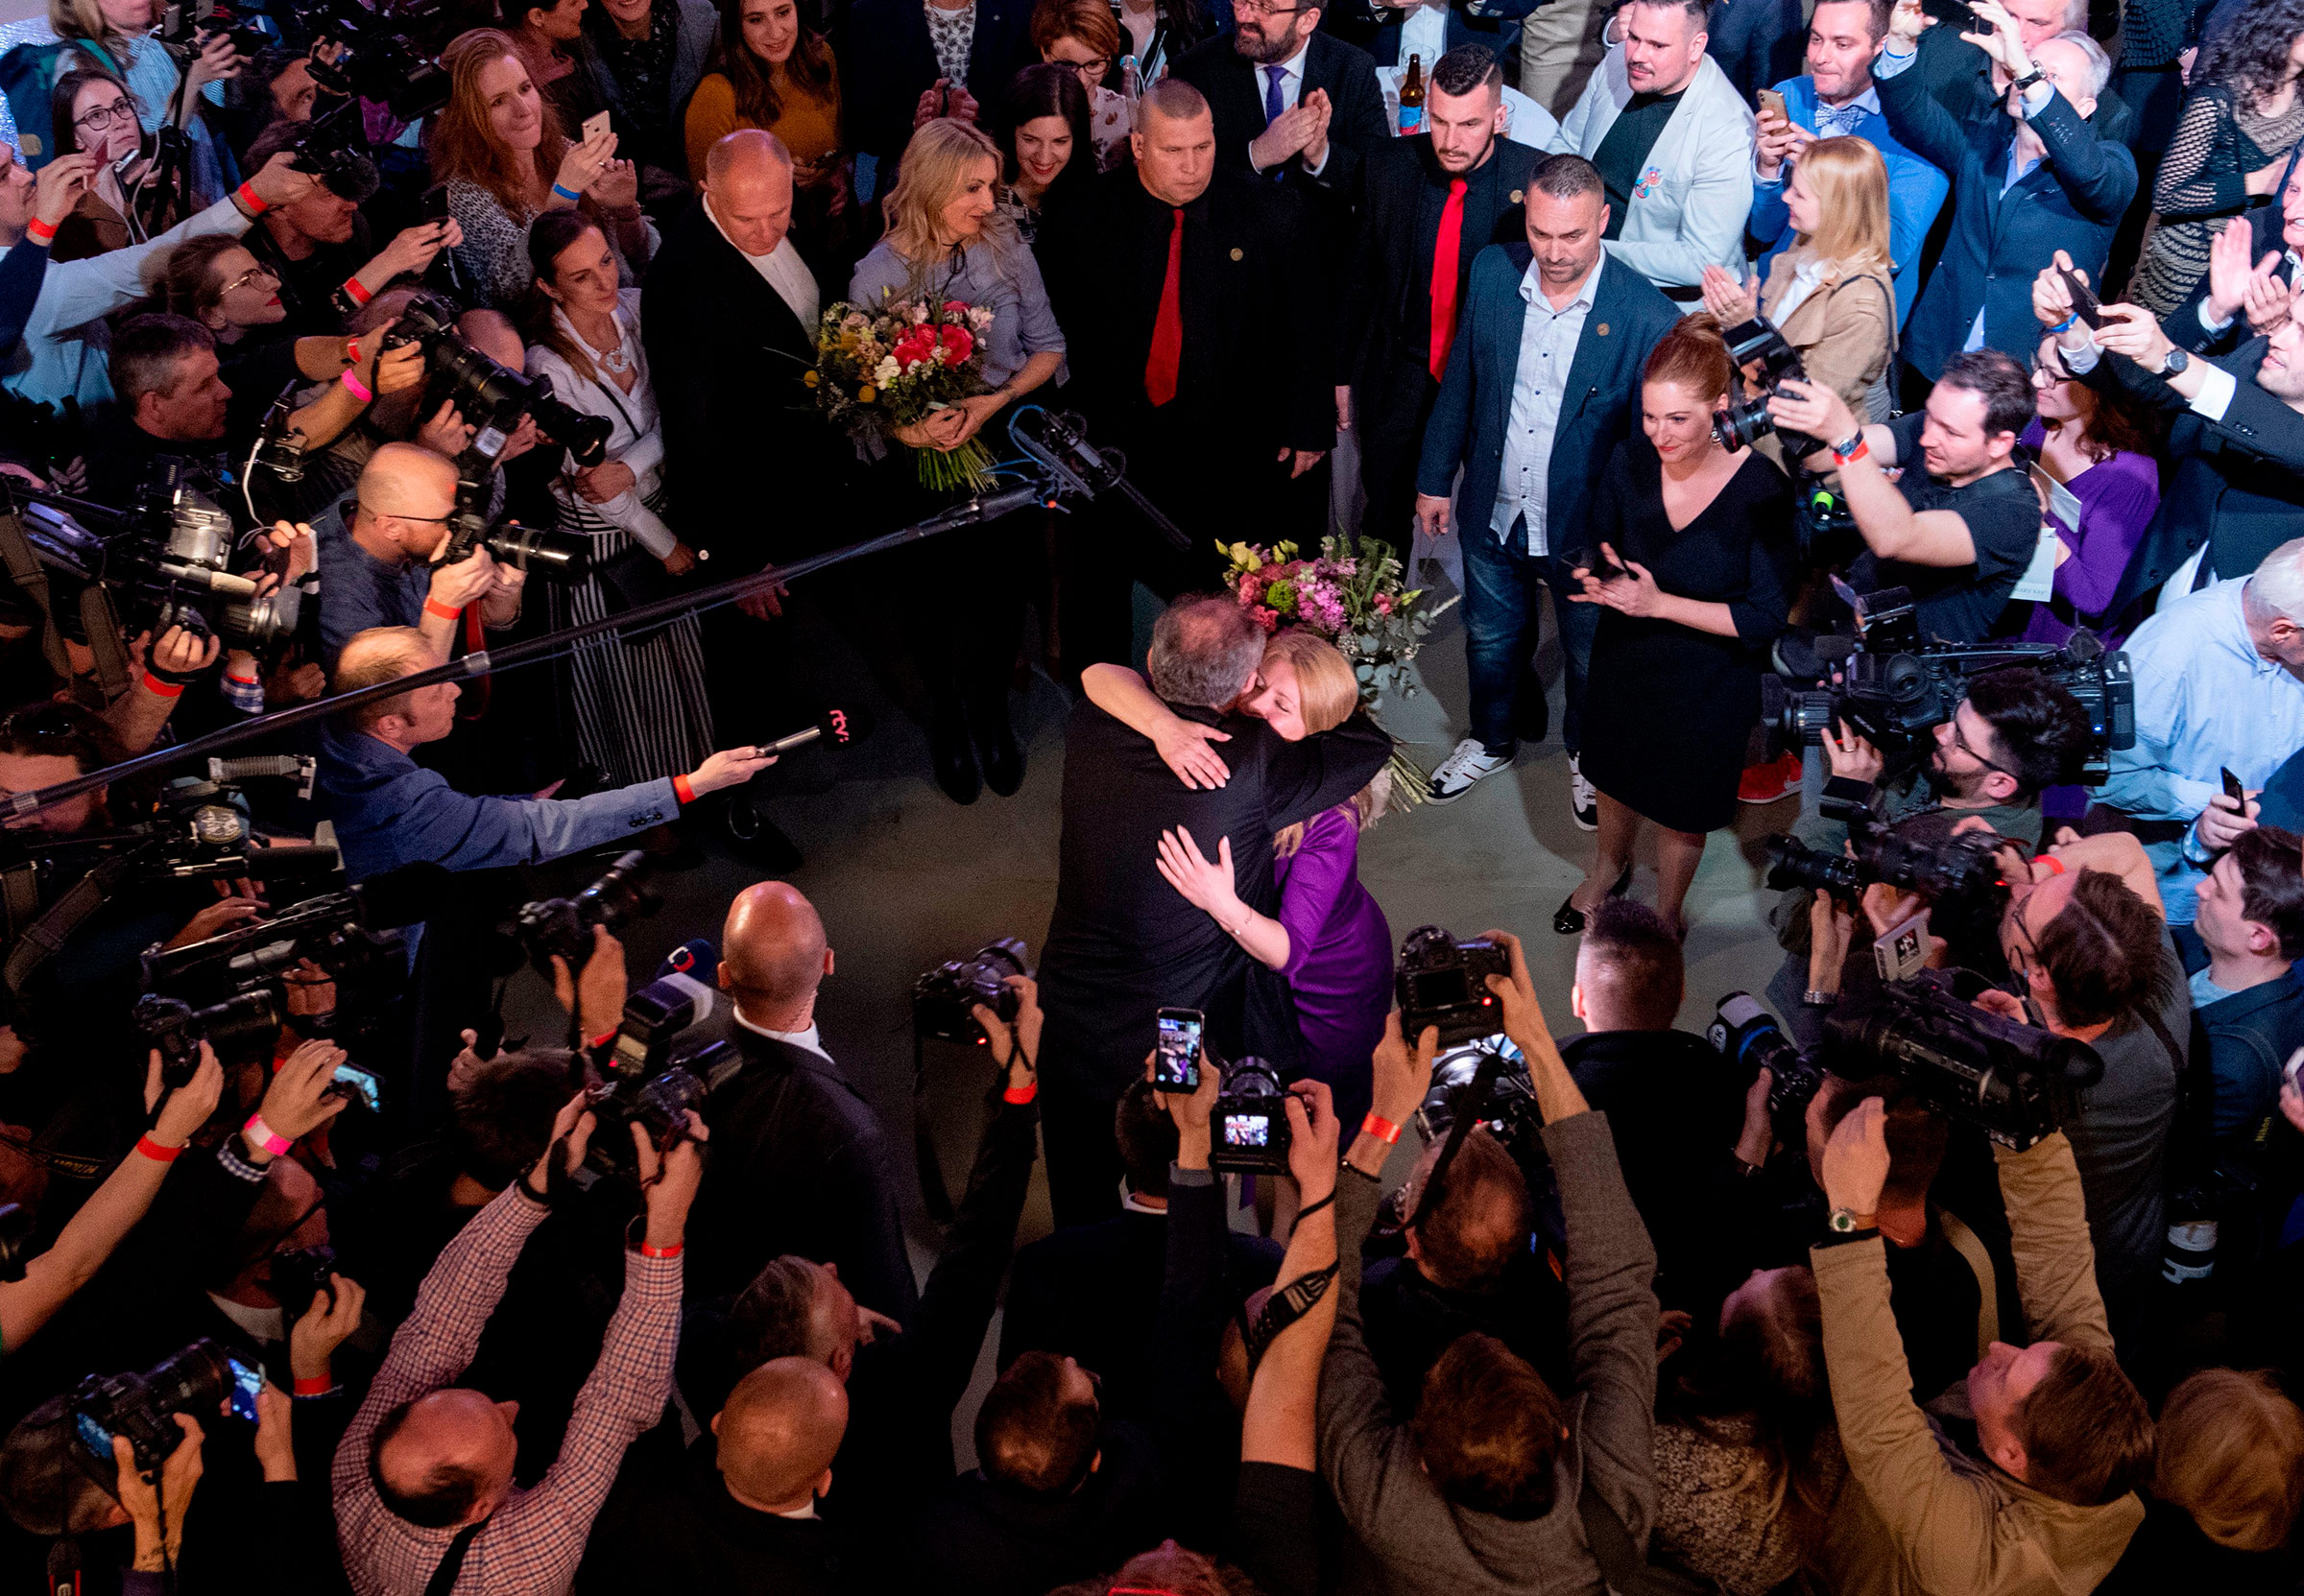 Slovak President Andrej Kiska congratulates Slovakis's President elect Zuzana Caputova as she wins the election in Bratislava, Slovakia on March 30, 2019.